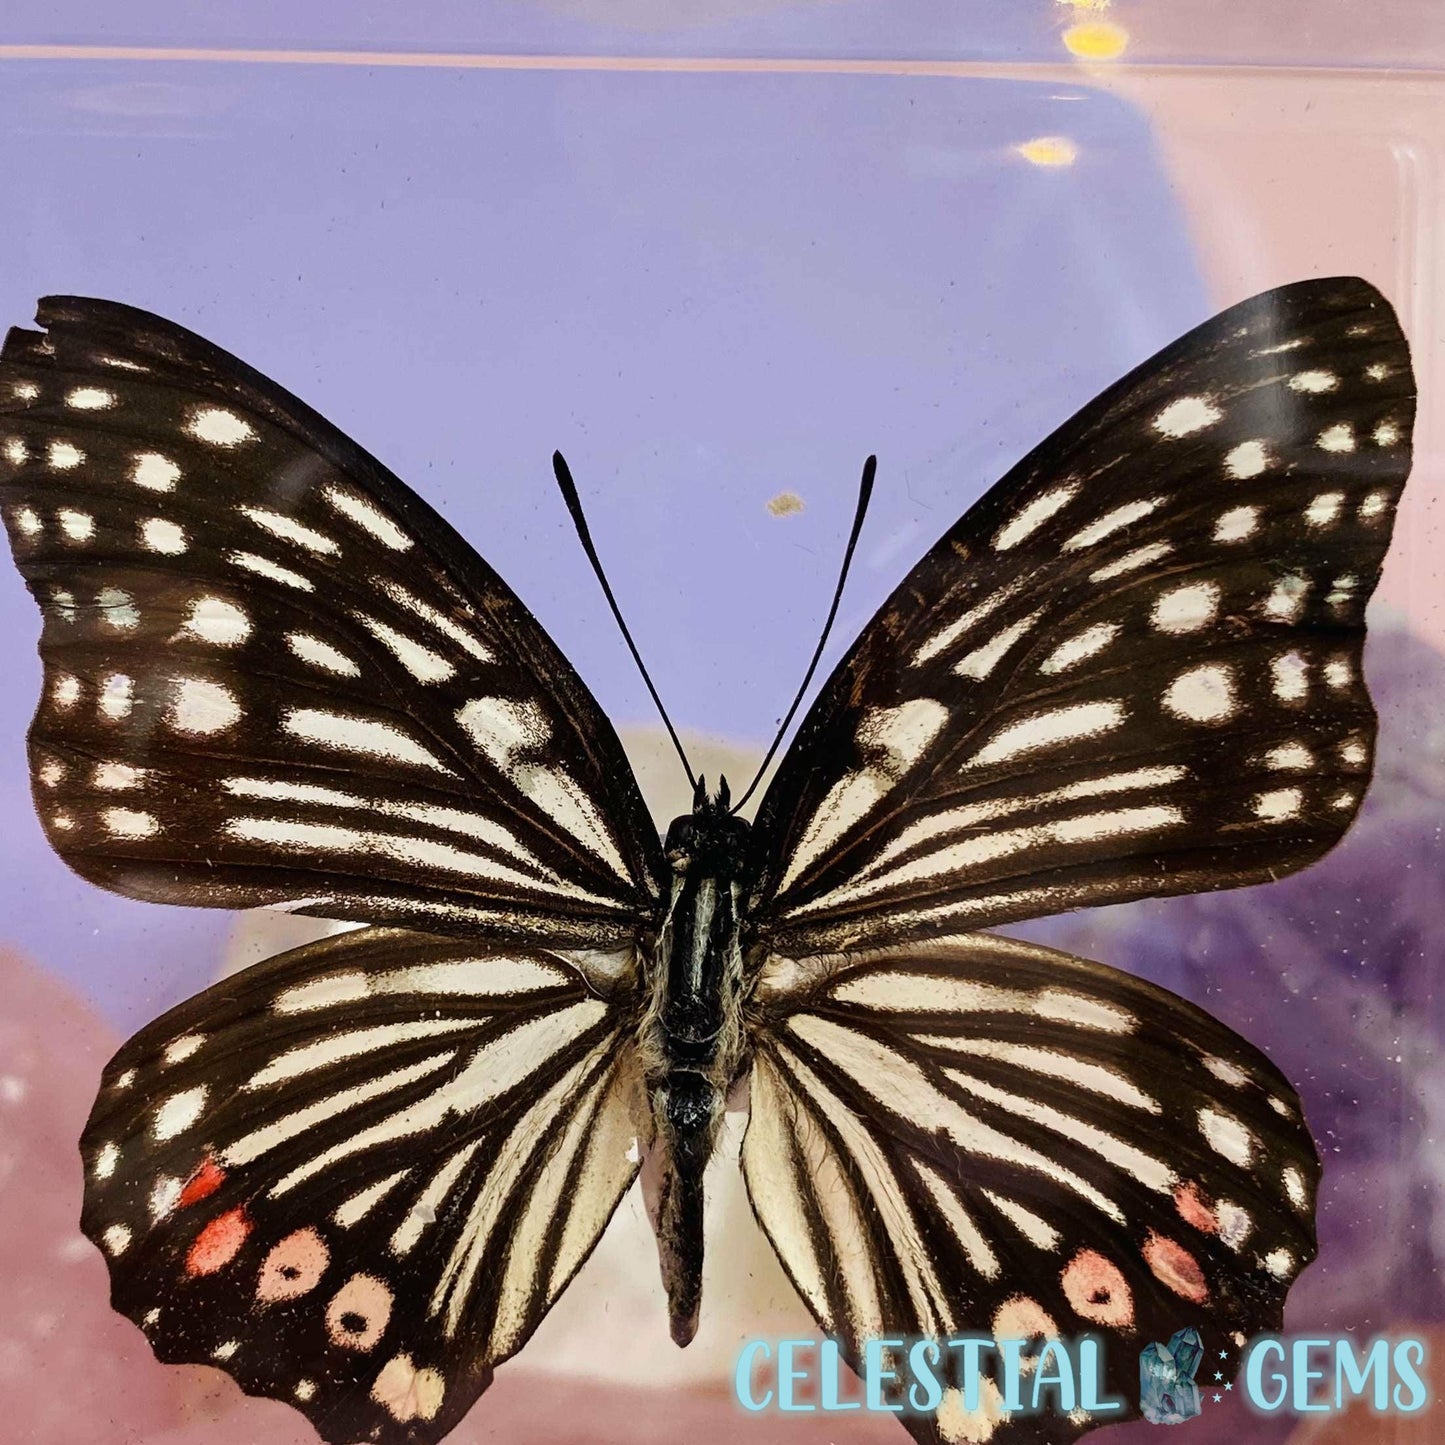 'Hestina Assimilis' Butterfly Specimen in Frame